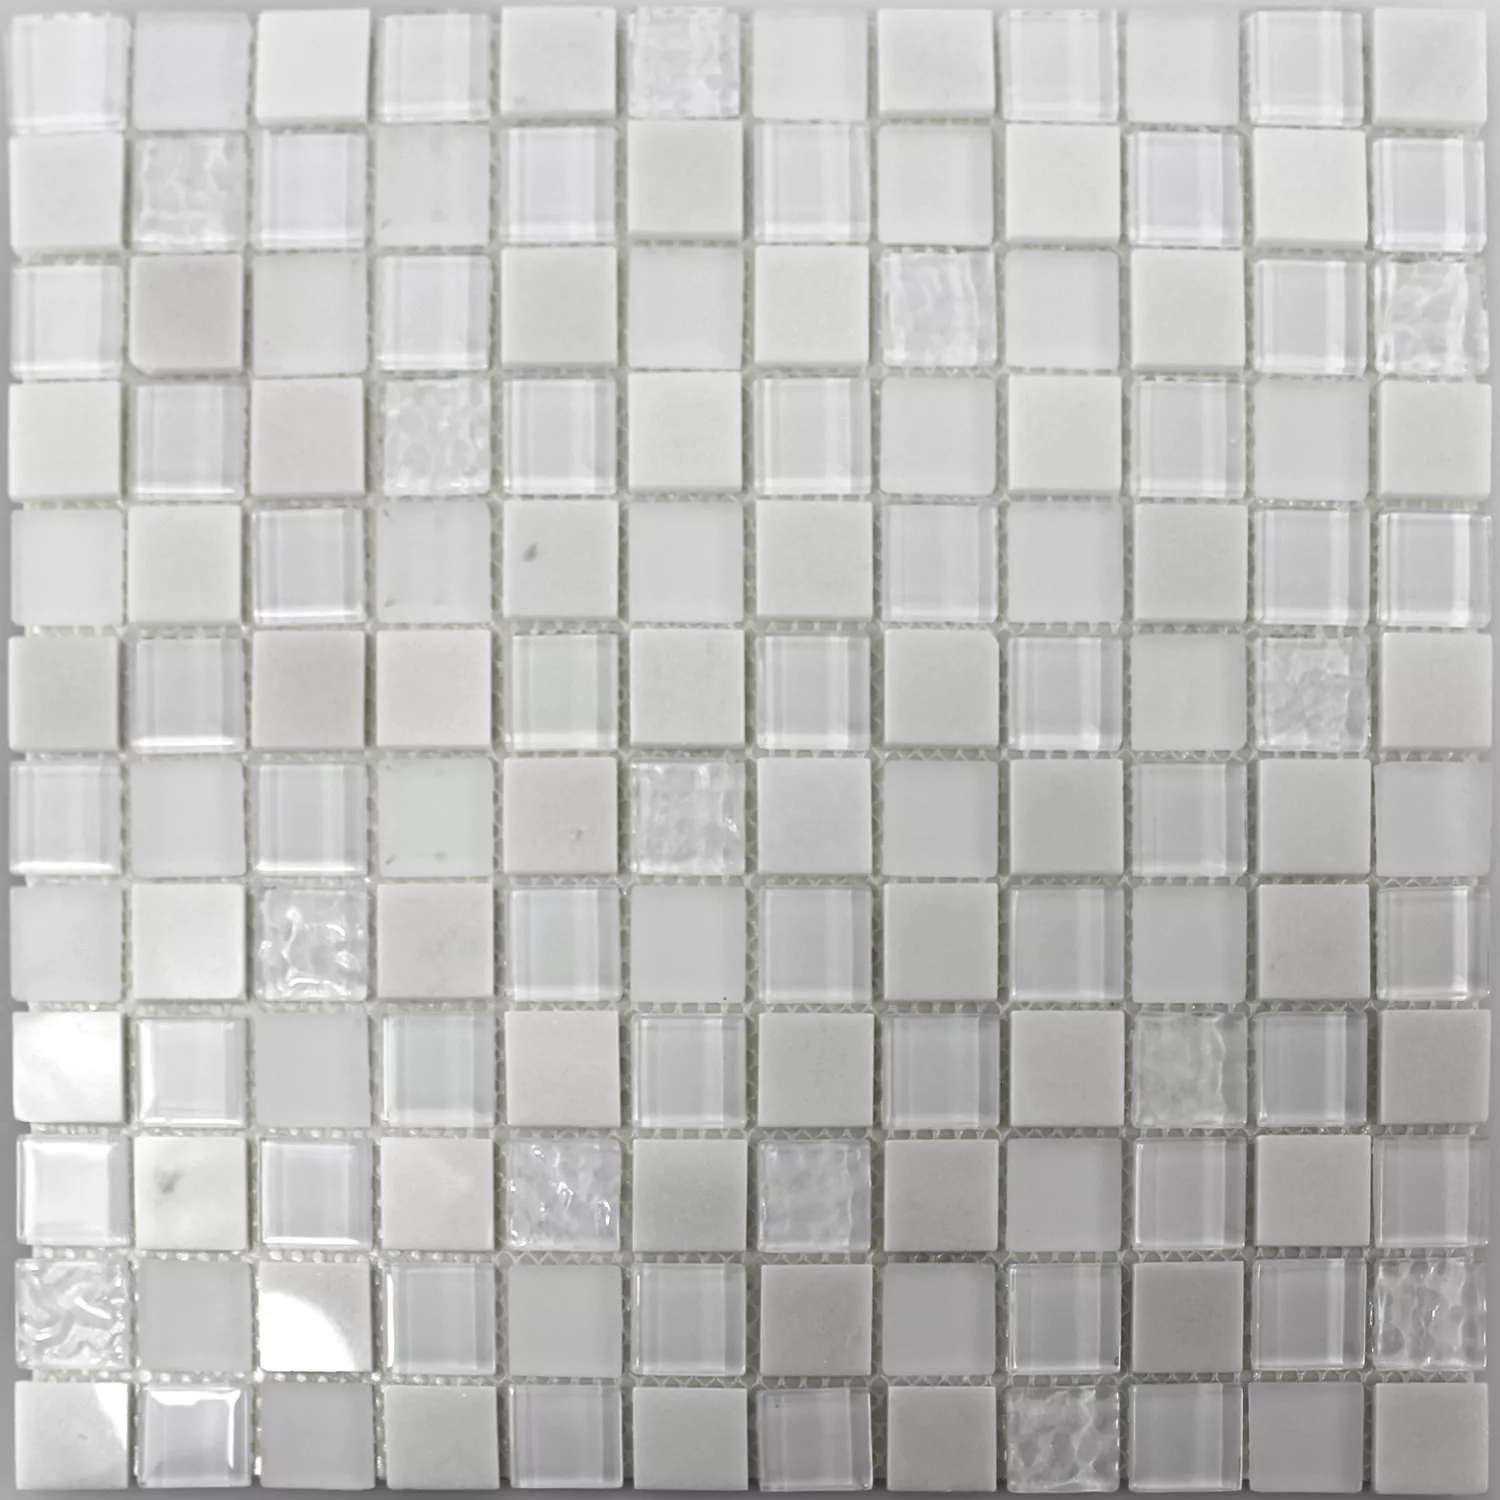 Autoadesivoe Mosaico Pietra Naturale Vetro Mix Bianco